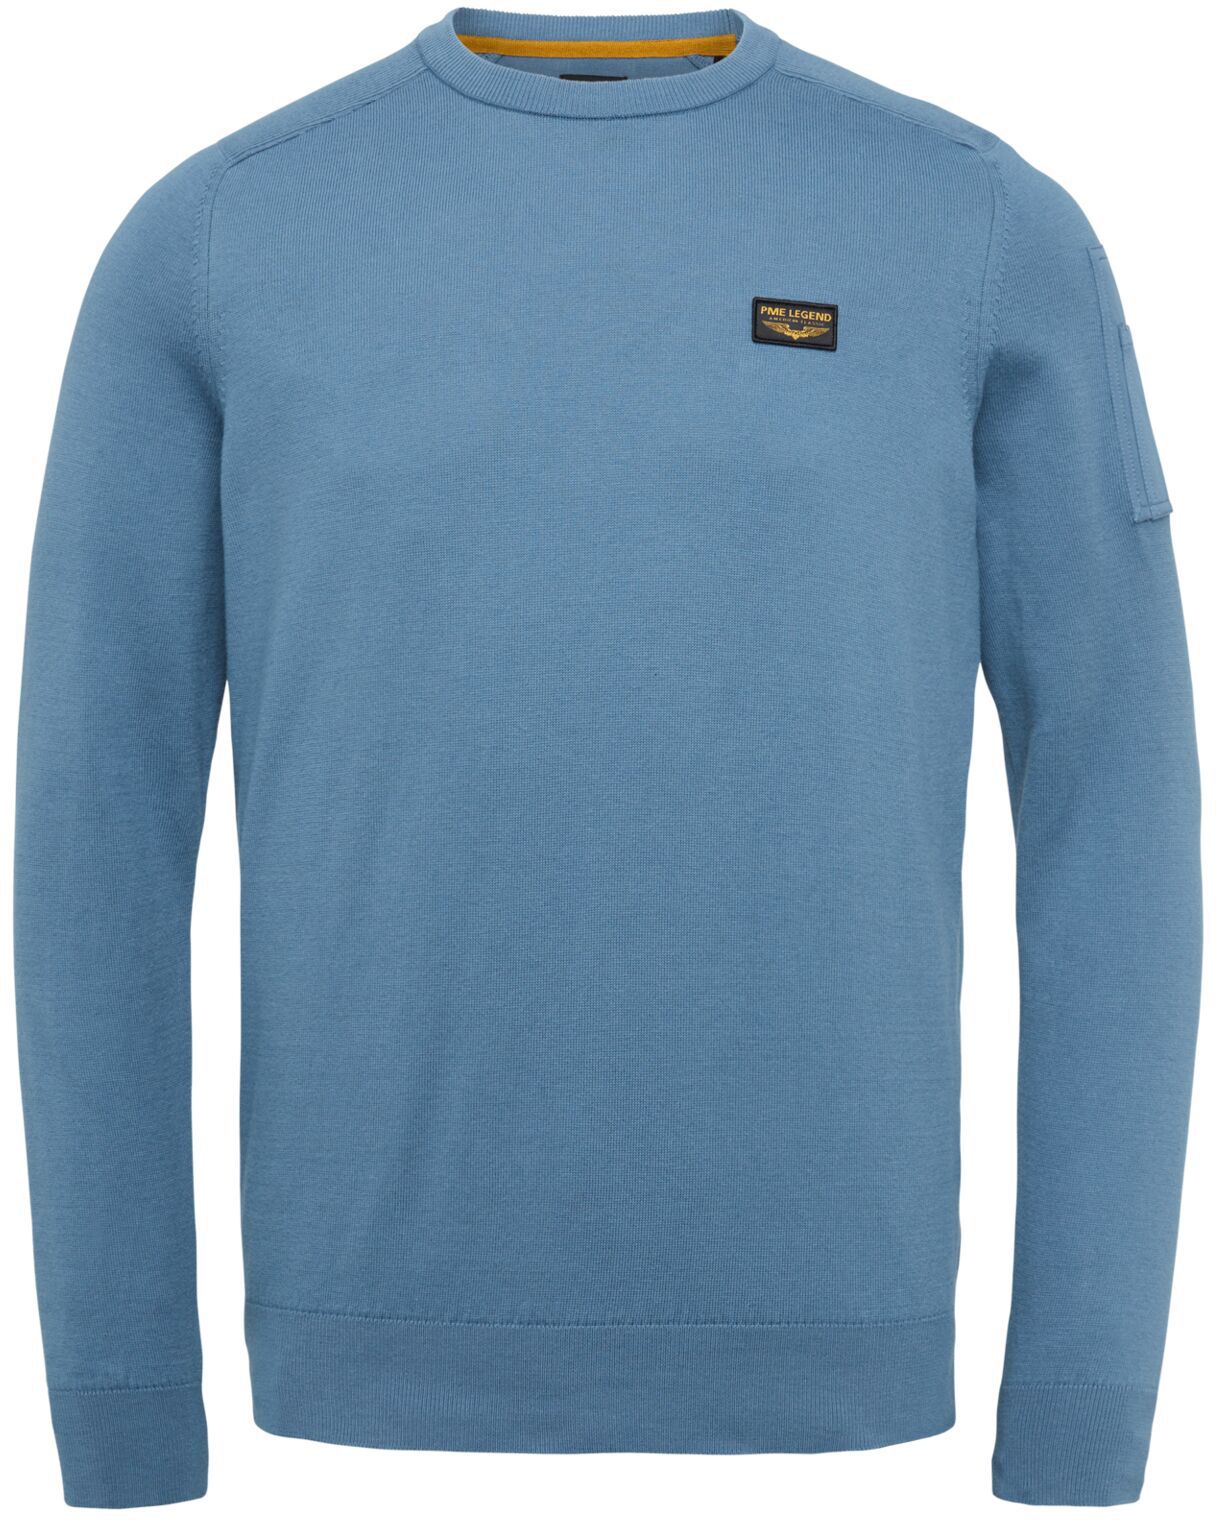 PME Legend Buckley Sweater Blue size 3XL